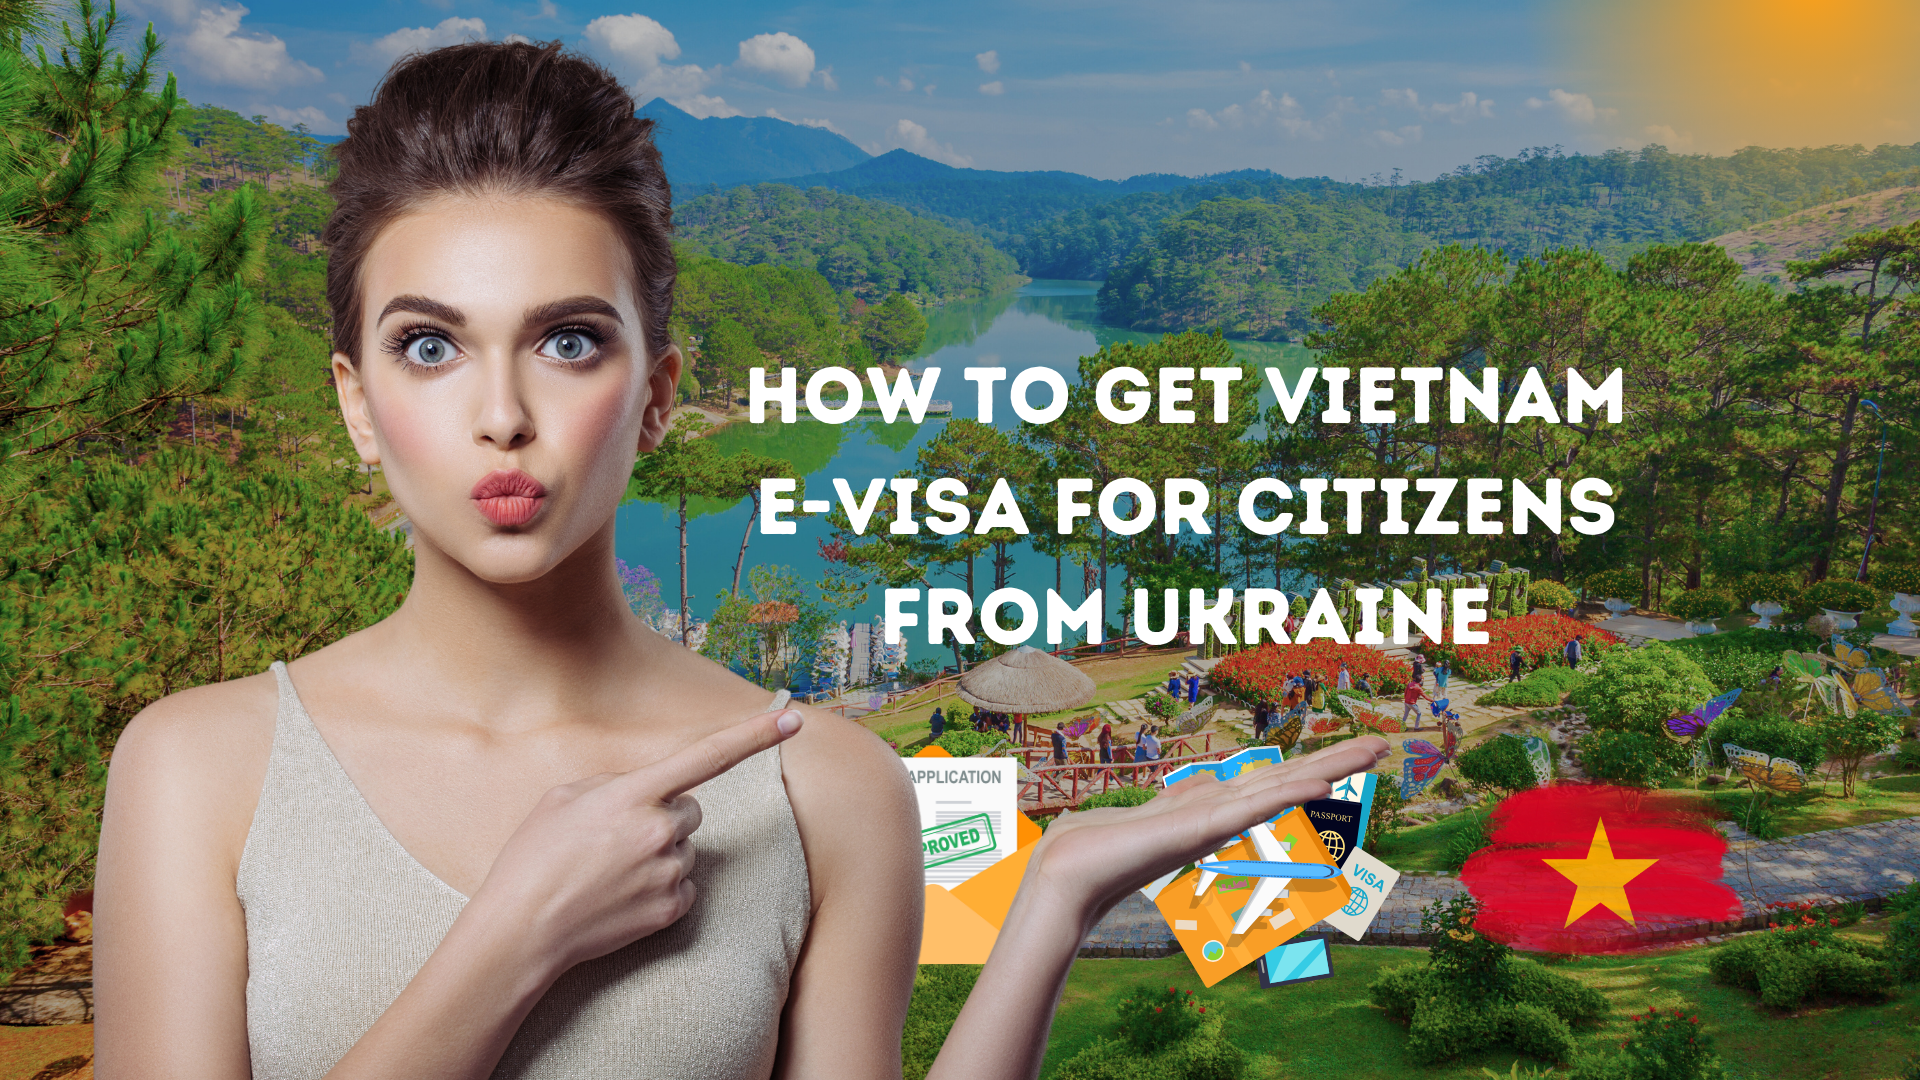 Vietnam Evisa for Citizens from Ukraine